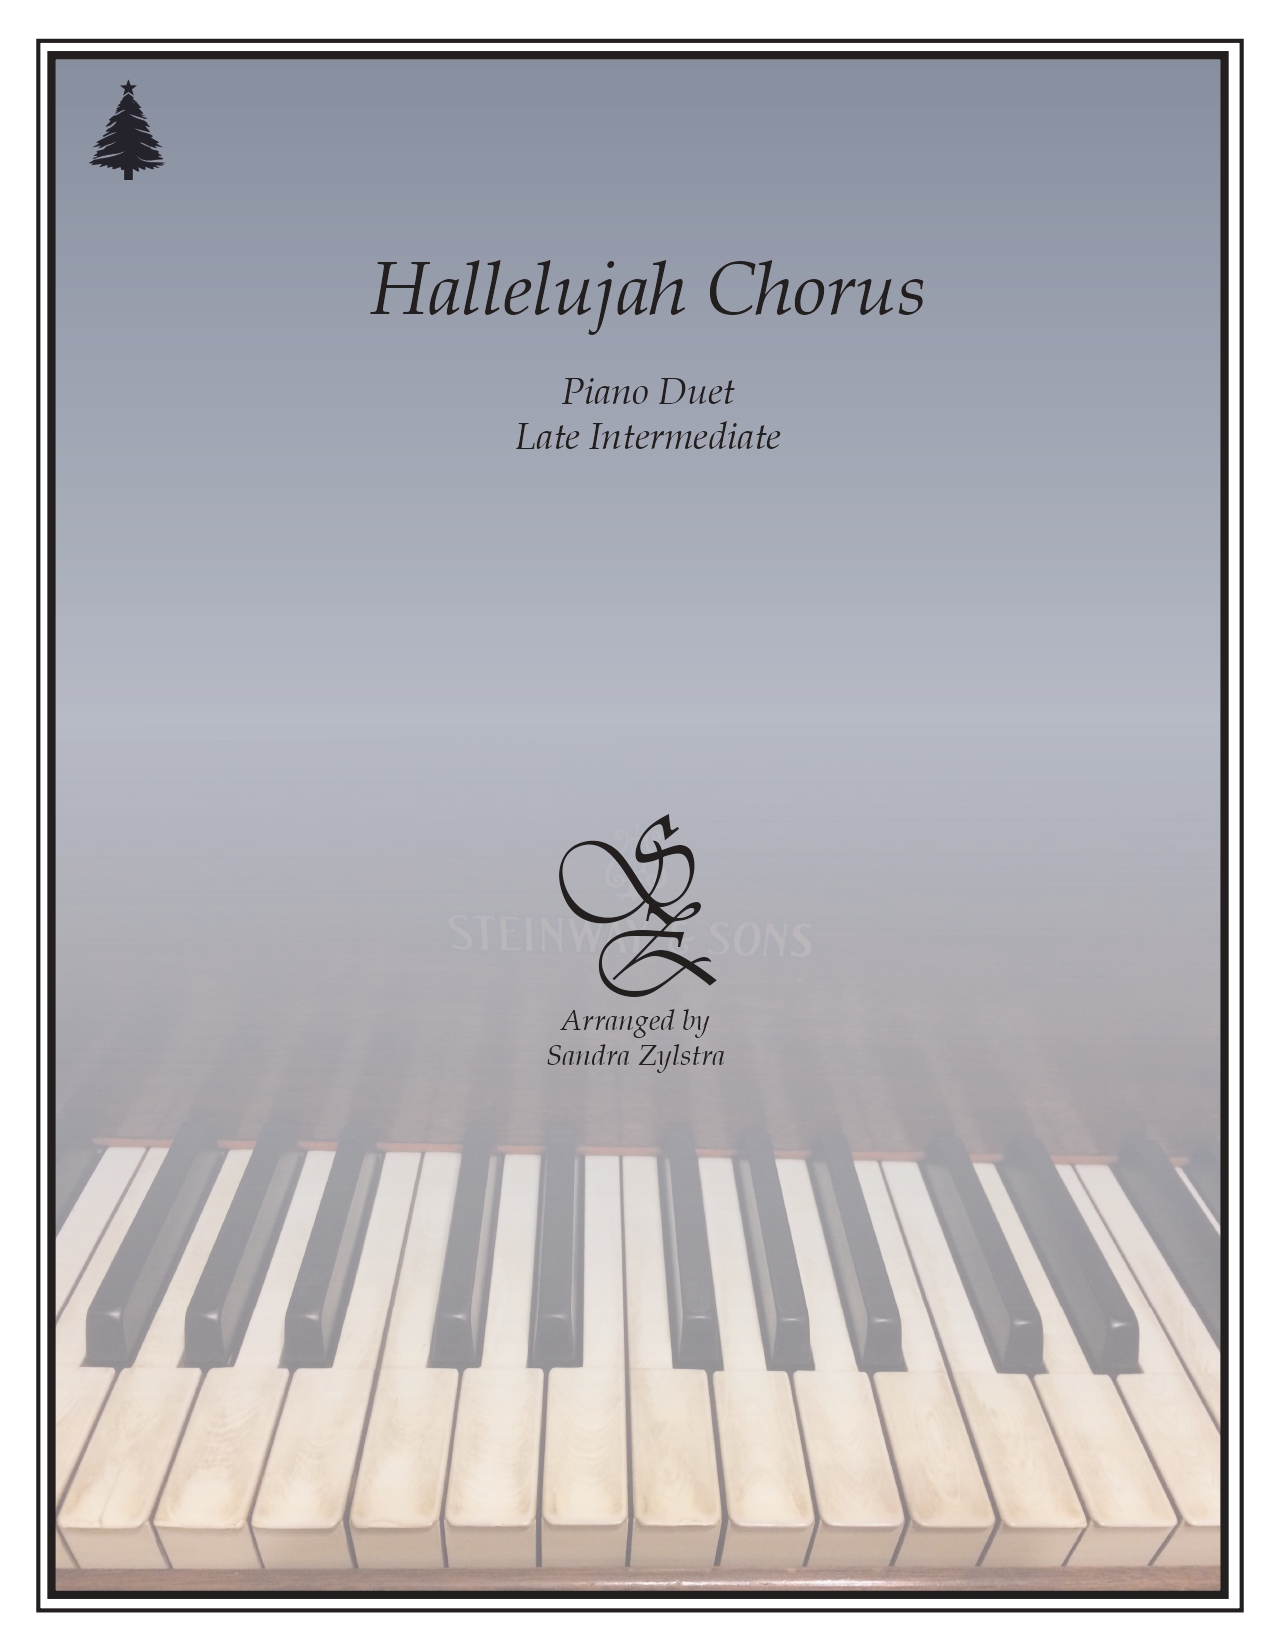 Hallelujah Chorus late intermediate piano duet cover page 00011